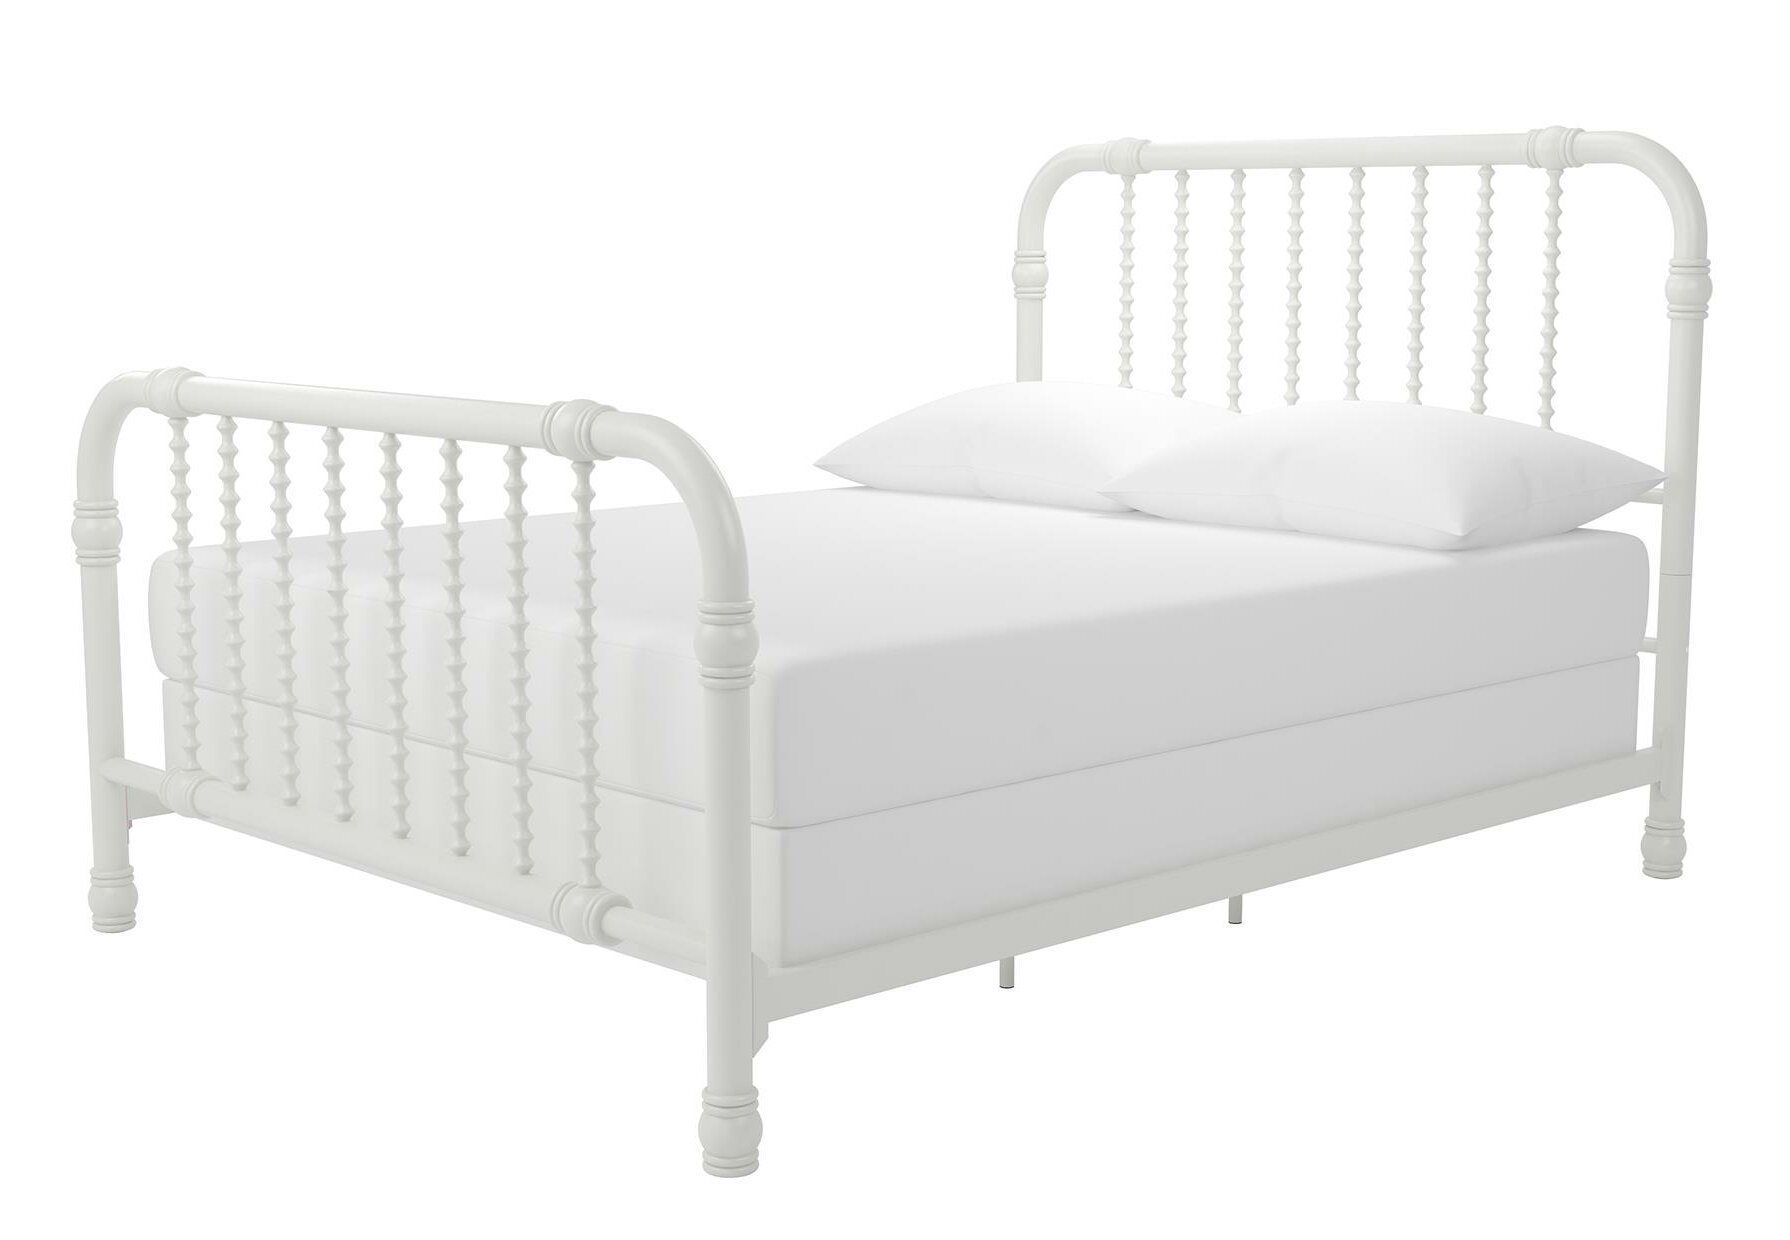 Monarch Hill Wren Bed - Bright White - Full - Image 1